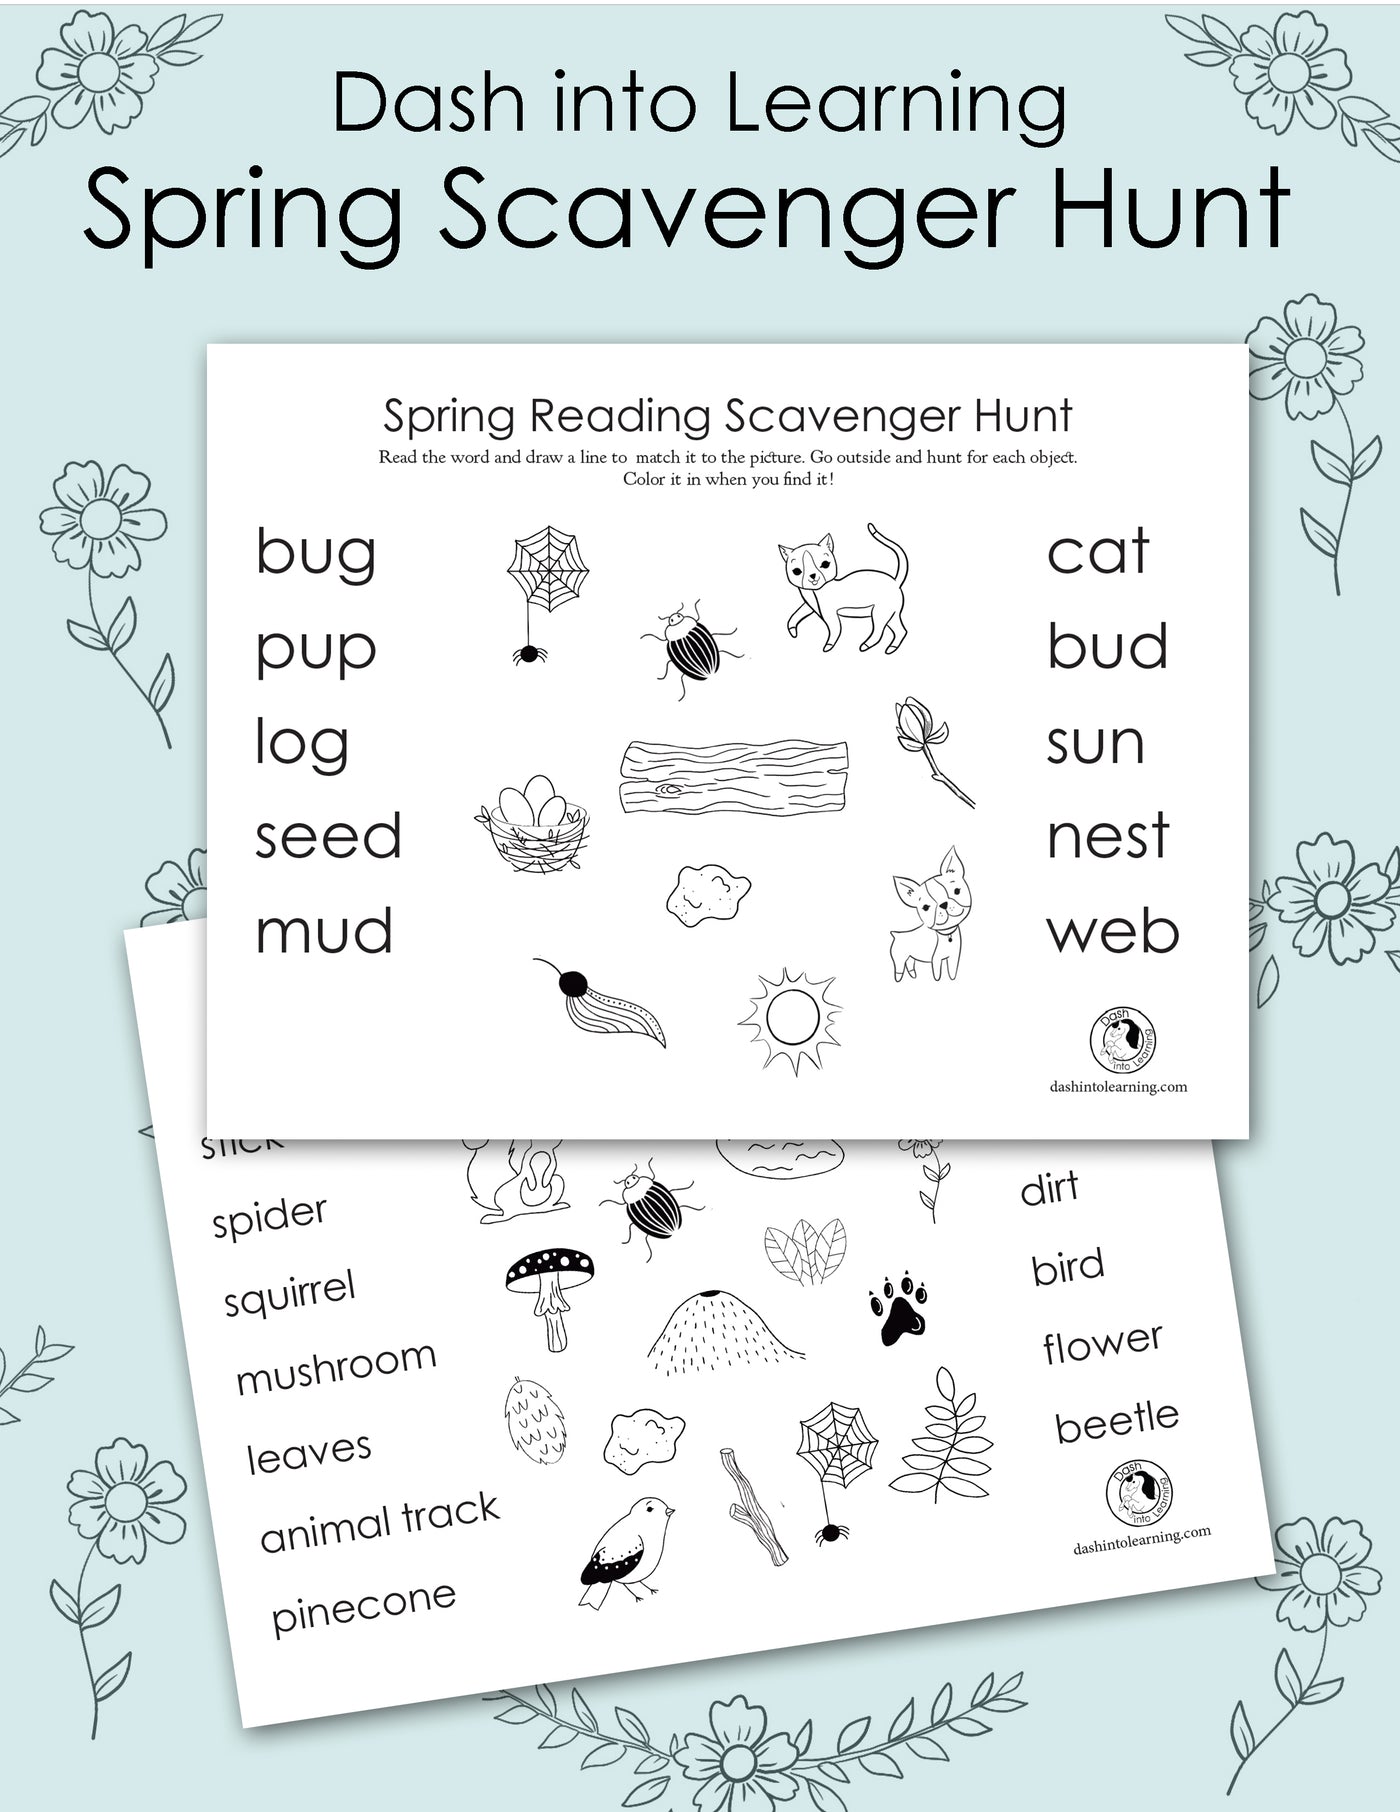 Spring Reading Scavenger Hunt!